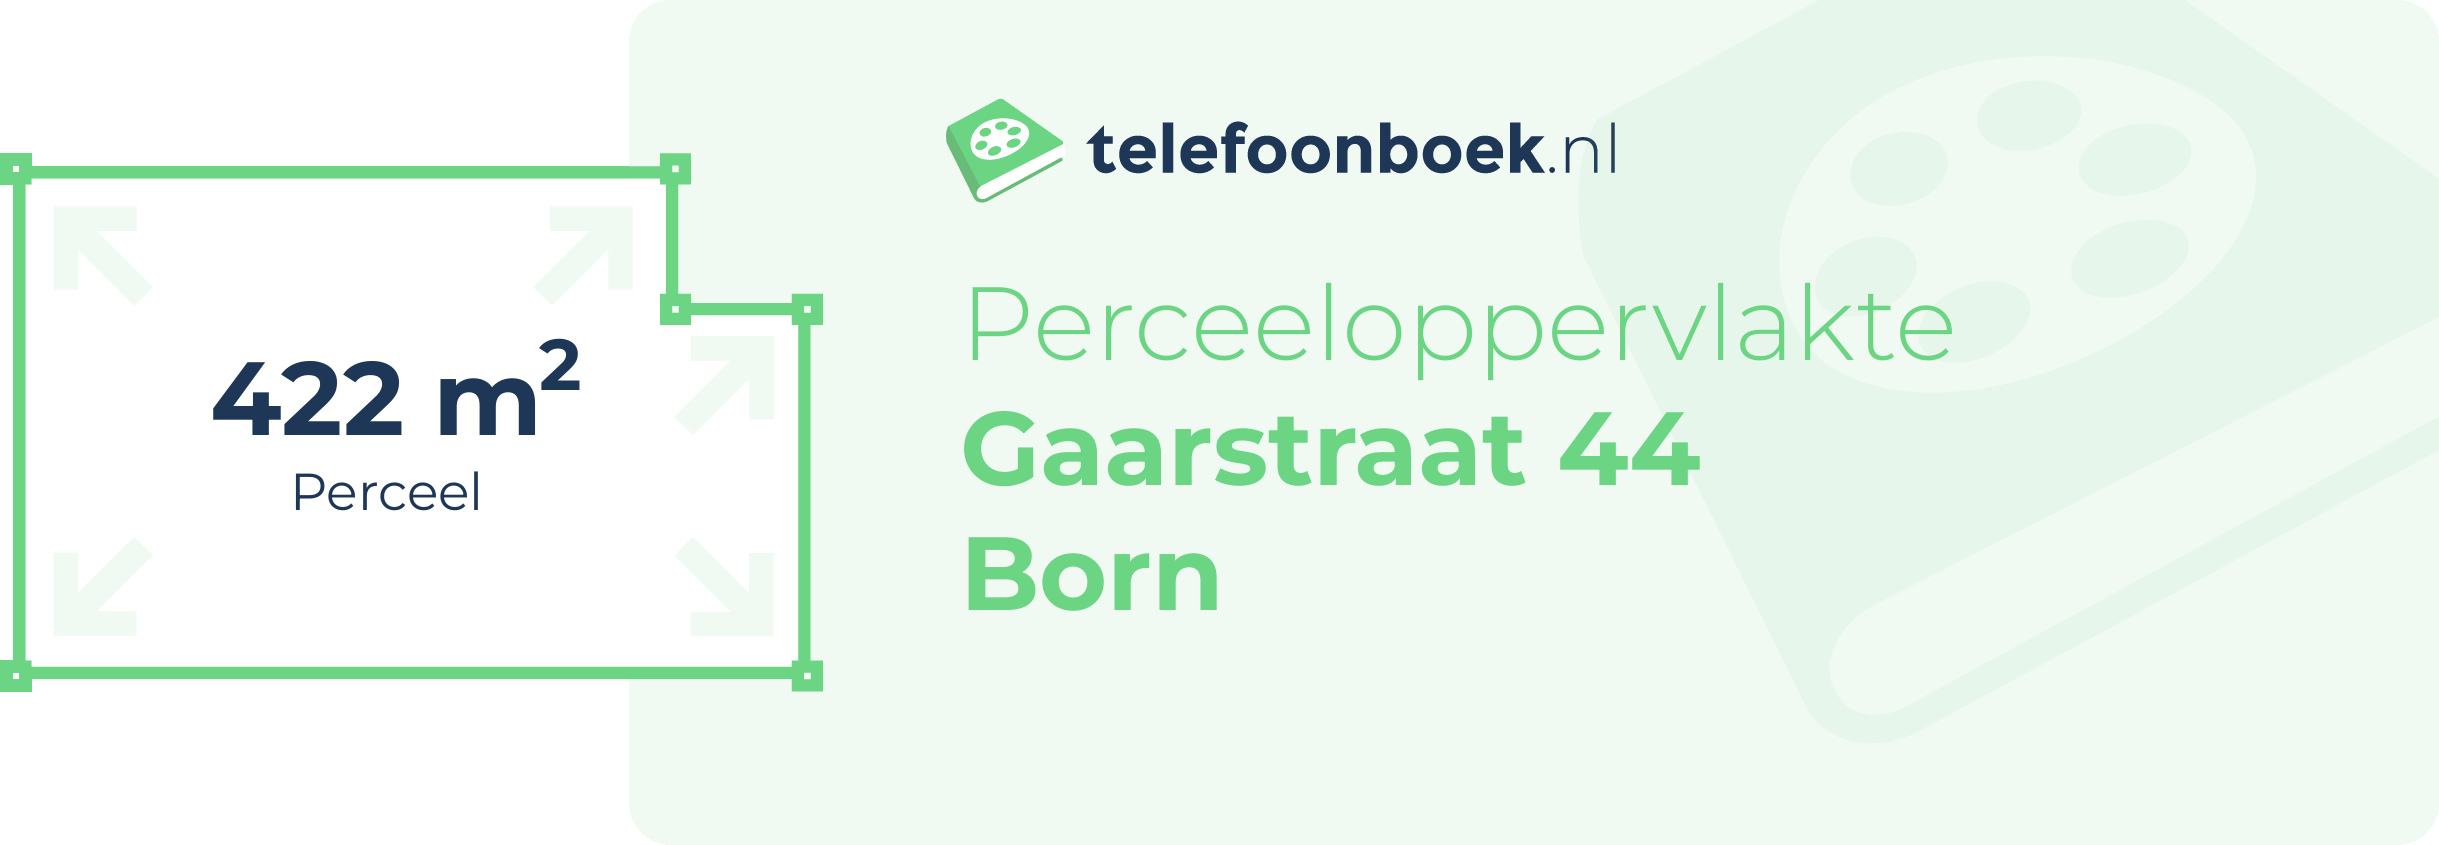 Perceeloppervlakte Gaarstraat 44 Born